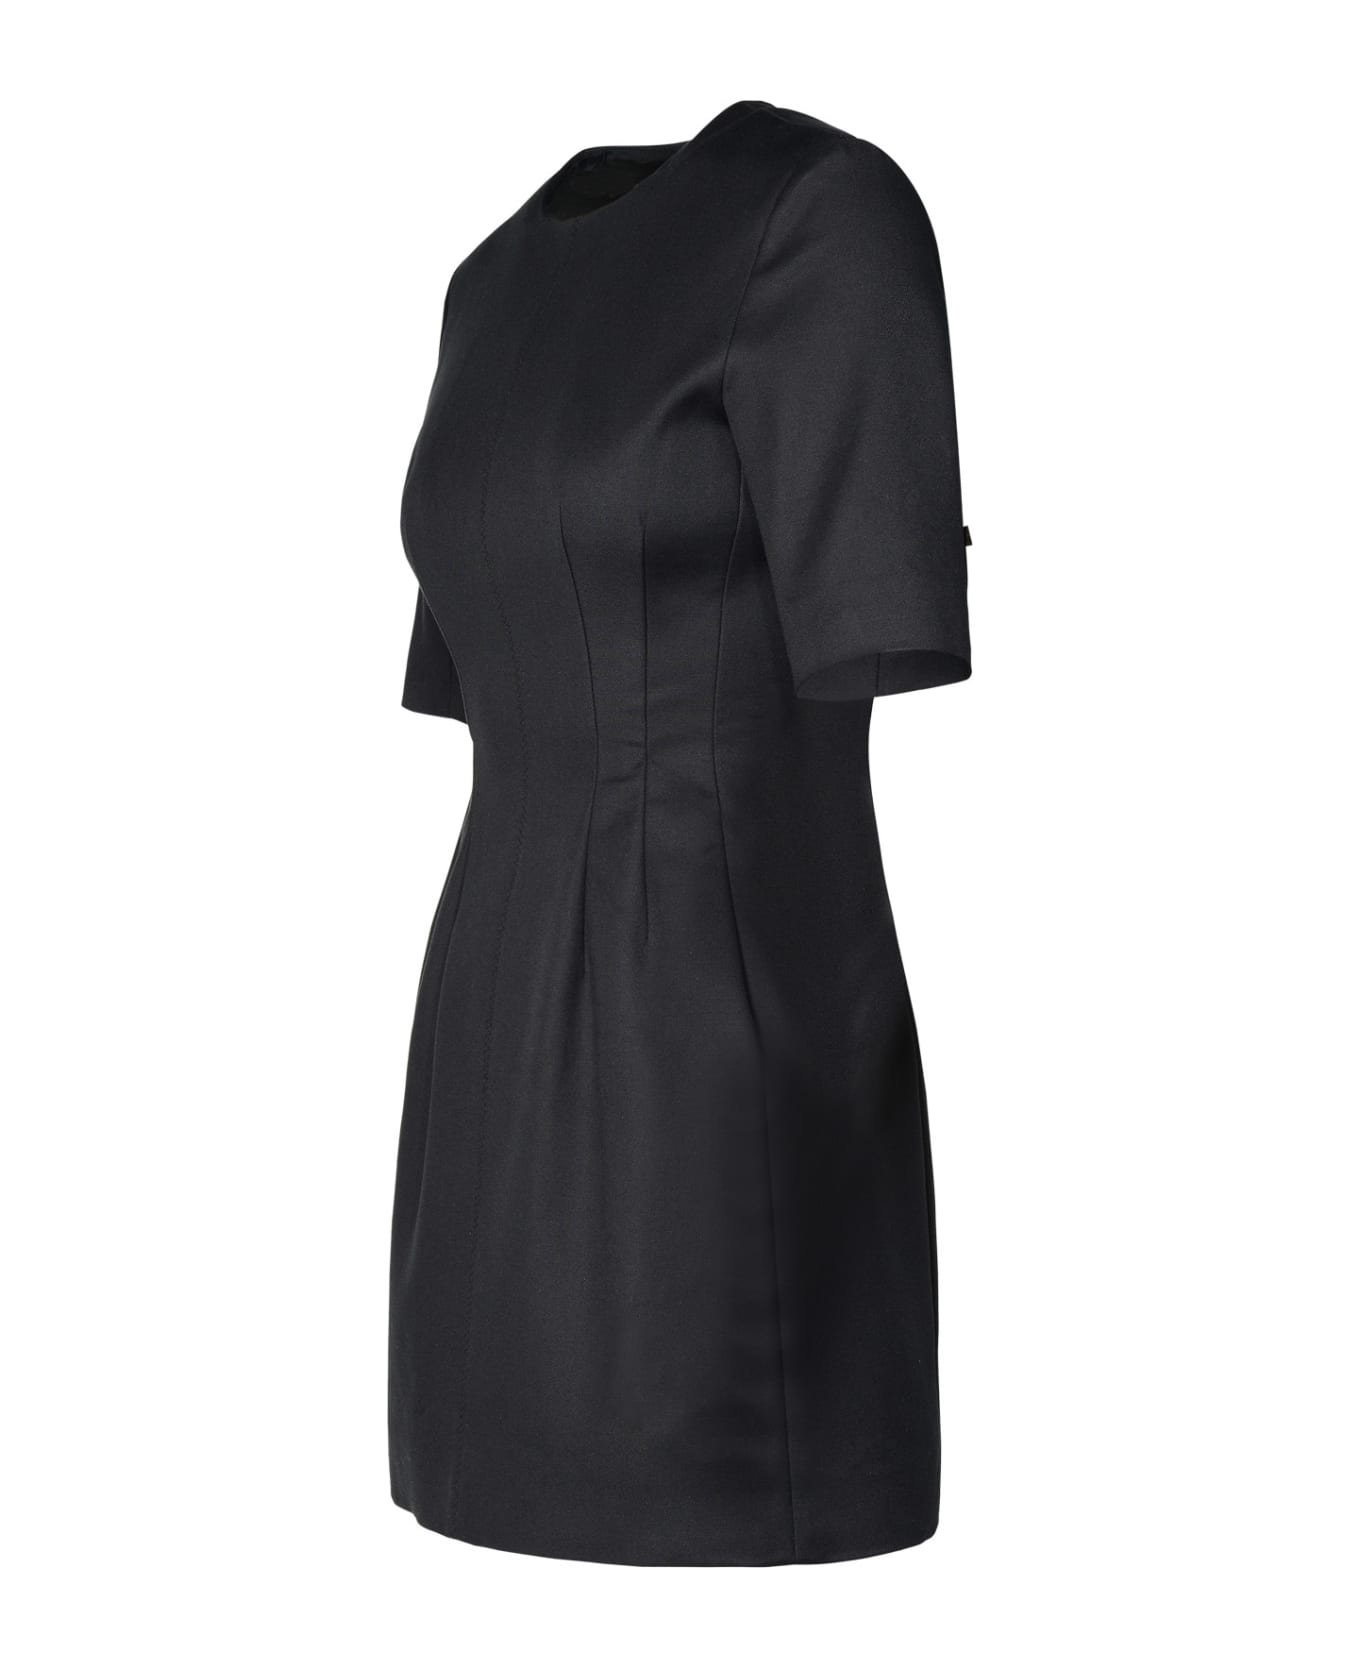 SportMax 'colomba' Black Cotton Blend Dress - Black